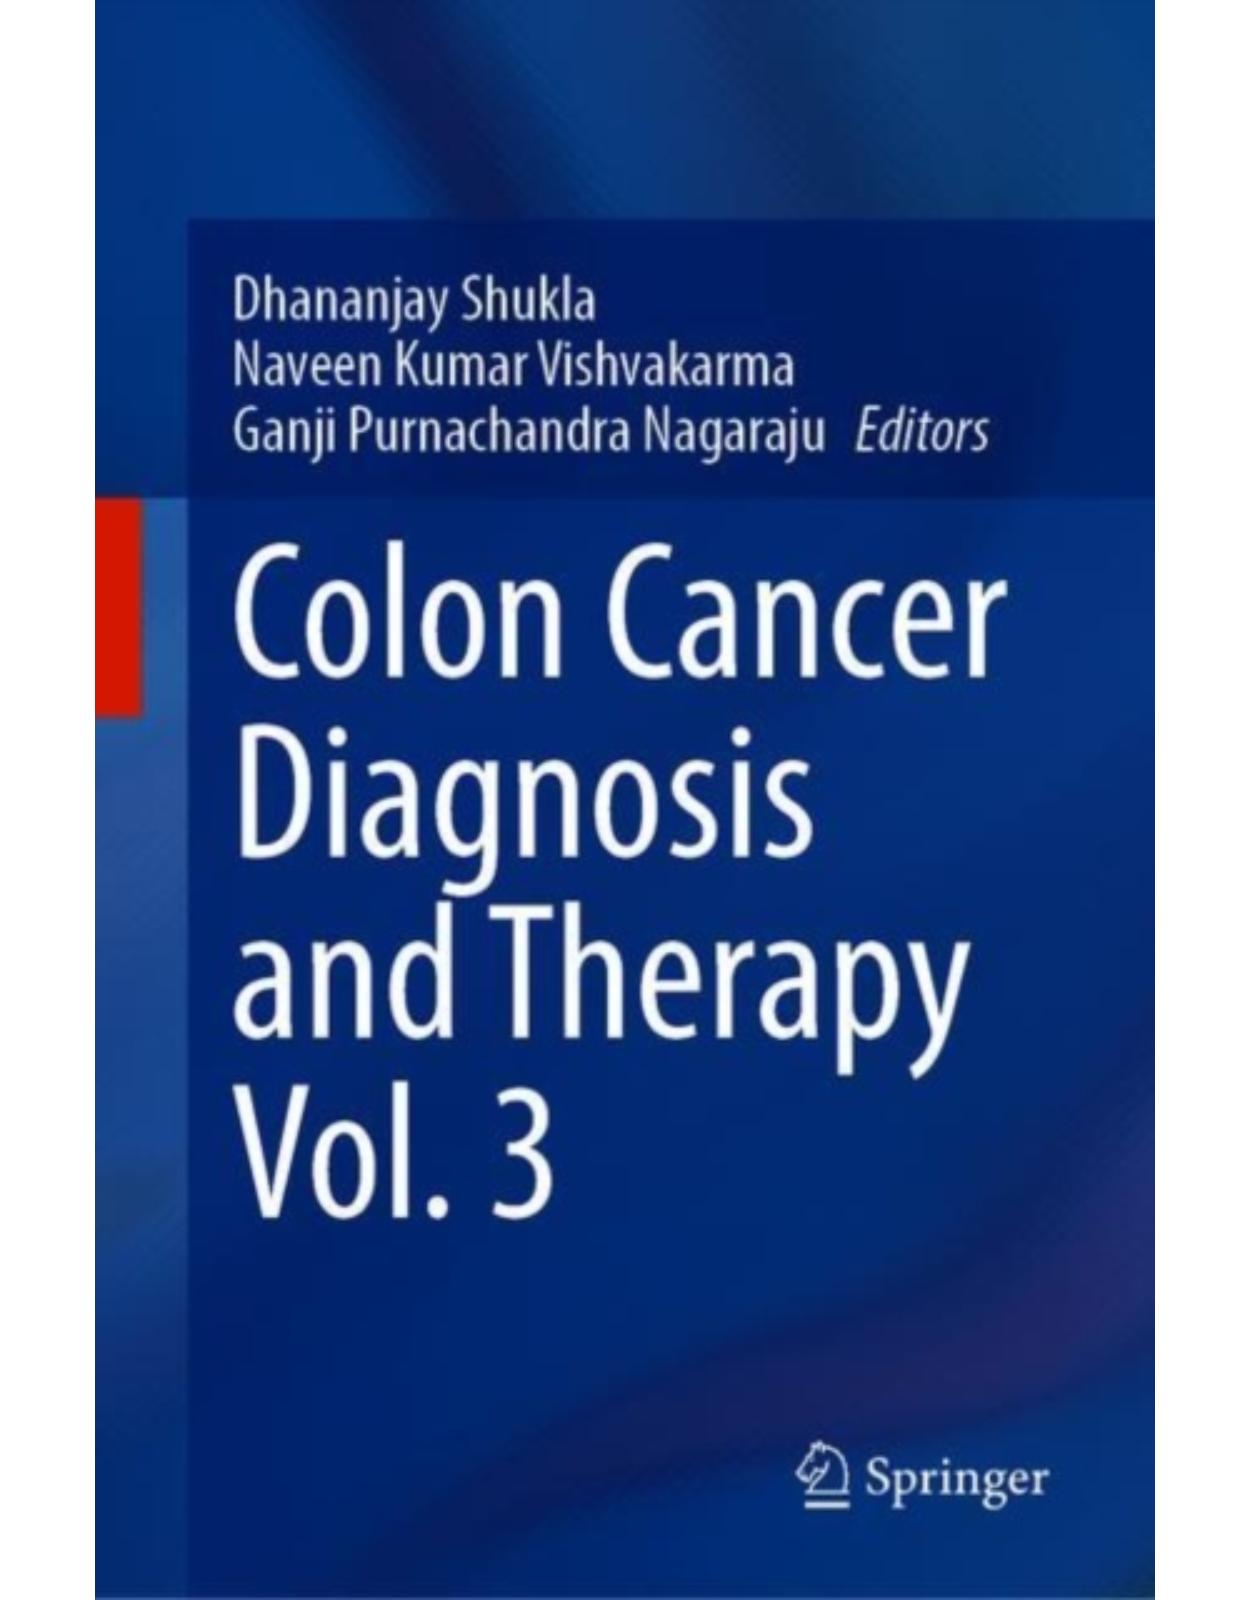 Colon Cancer Diagnosis and Therapy Vol. 3